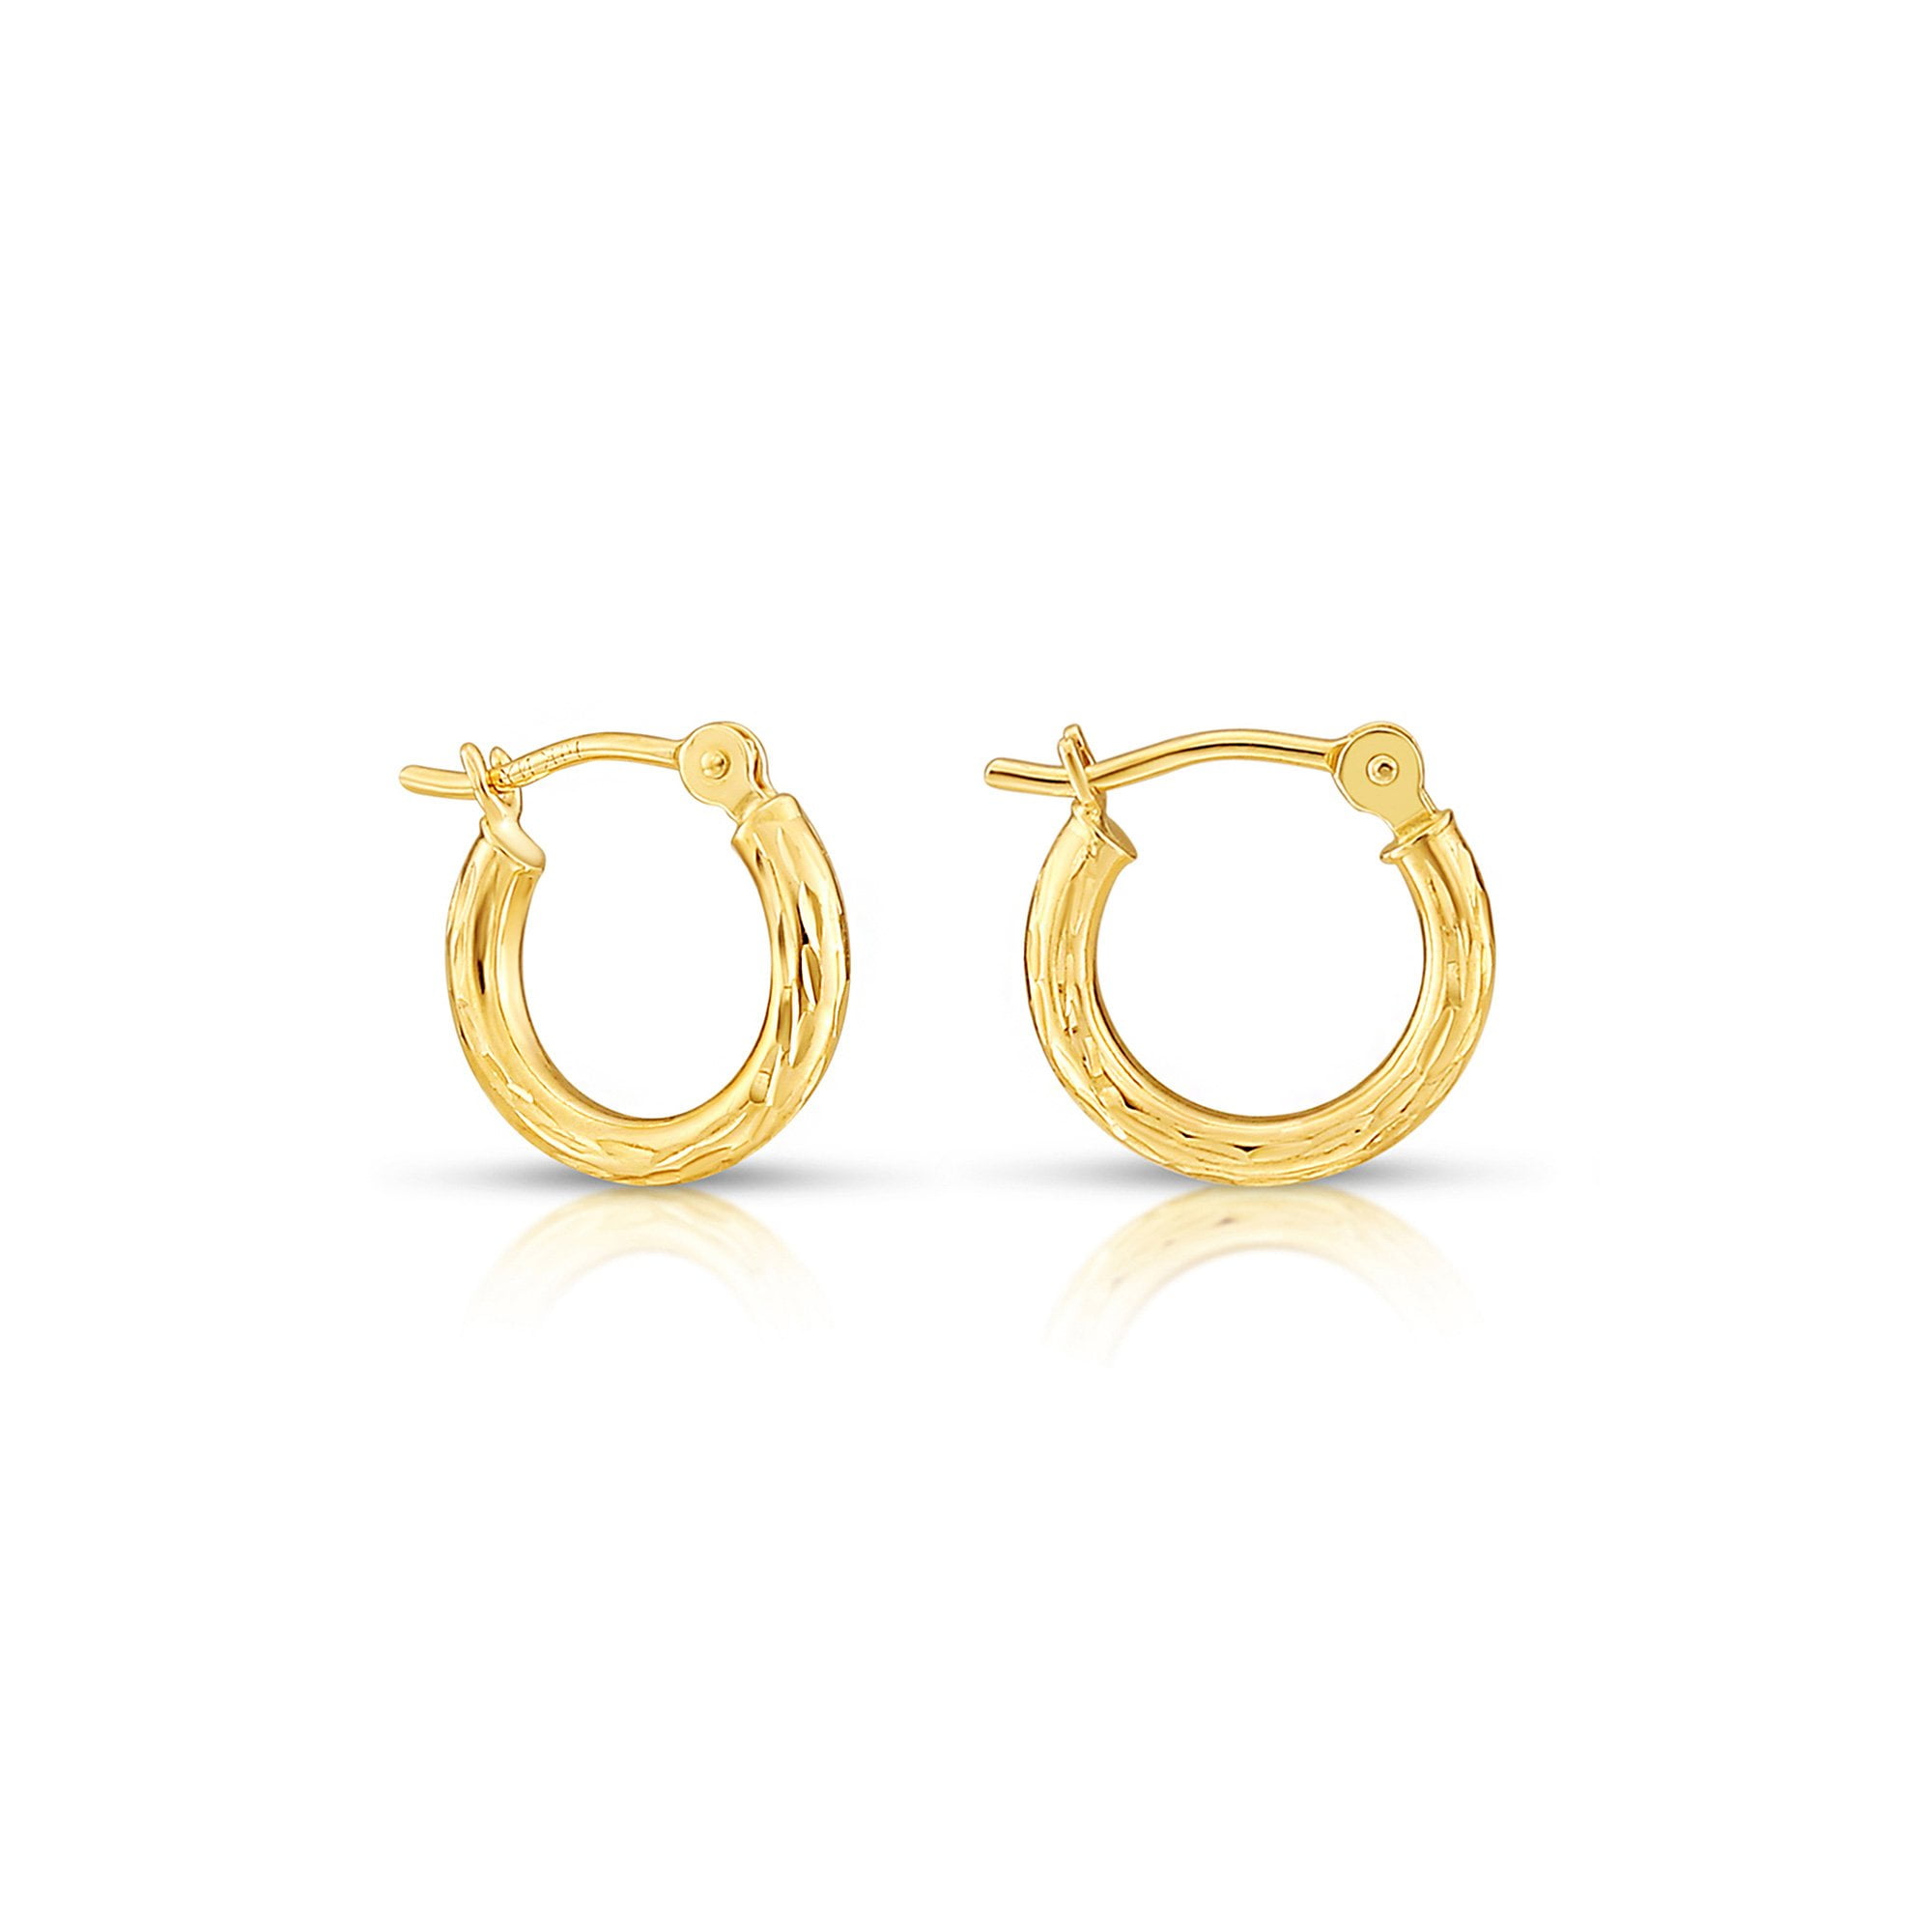 Small Oval Heart Huggie Hoop Earrings Solid 14k Yellow White Gold Diamond Cut 